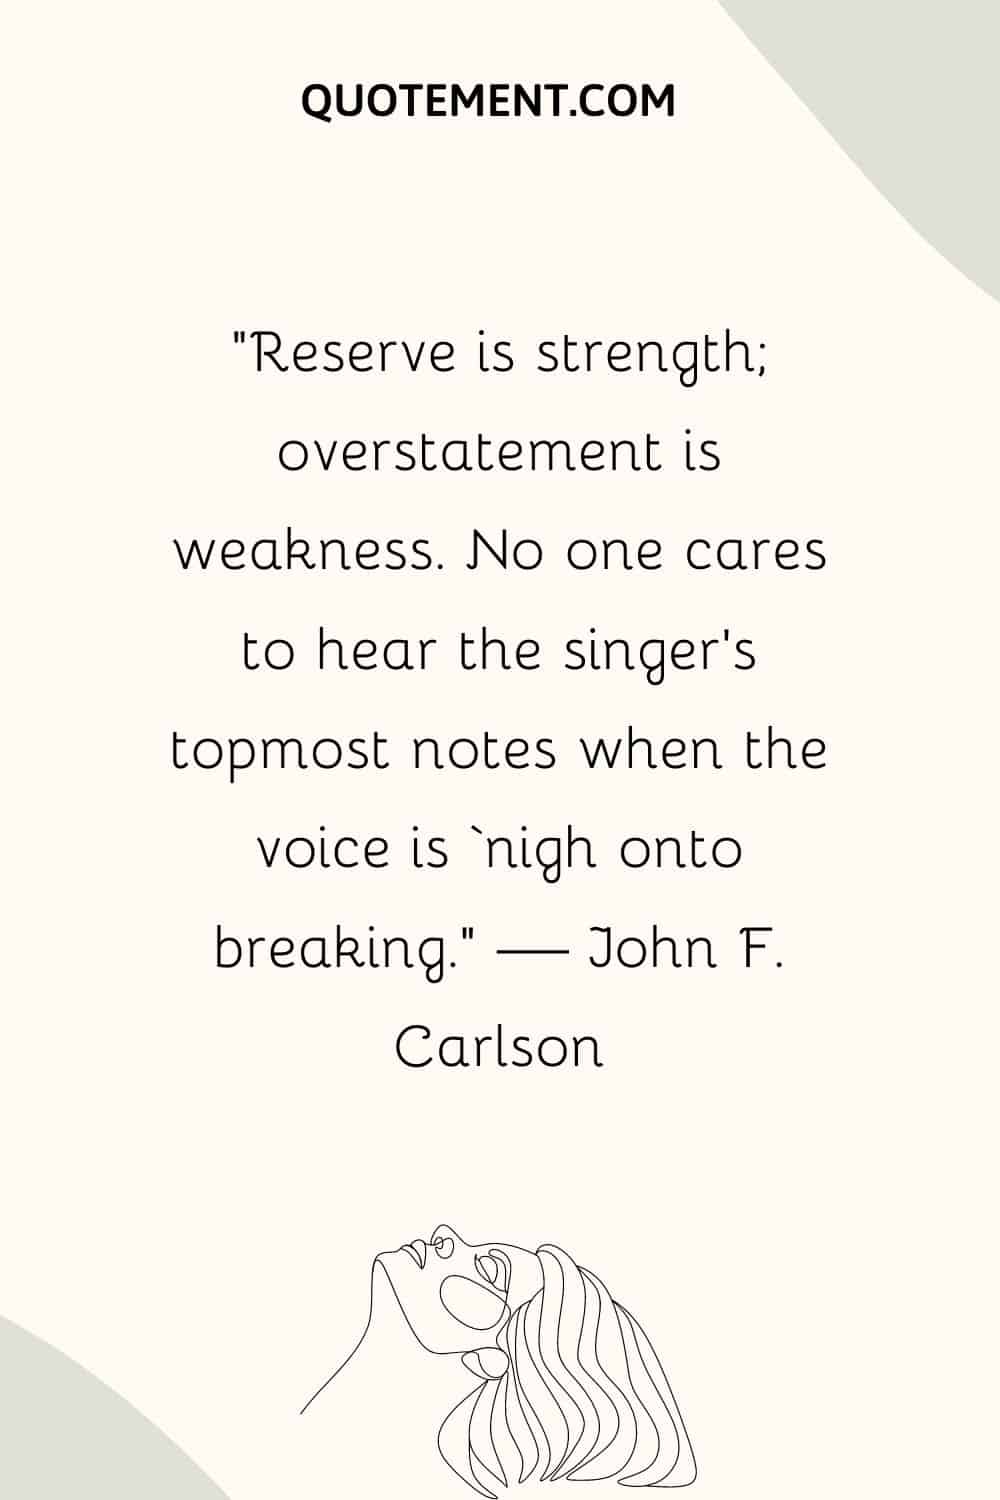 Reserve is strength; overstatement is weakness